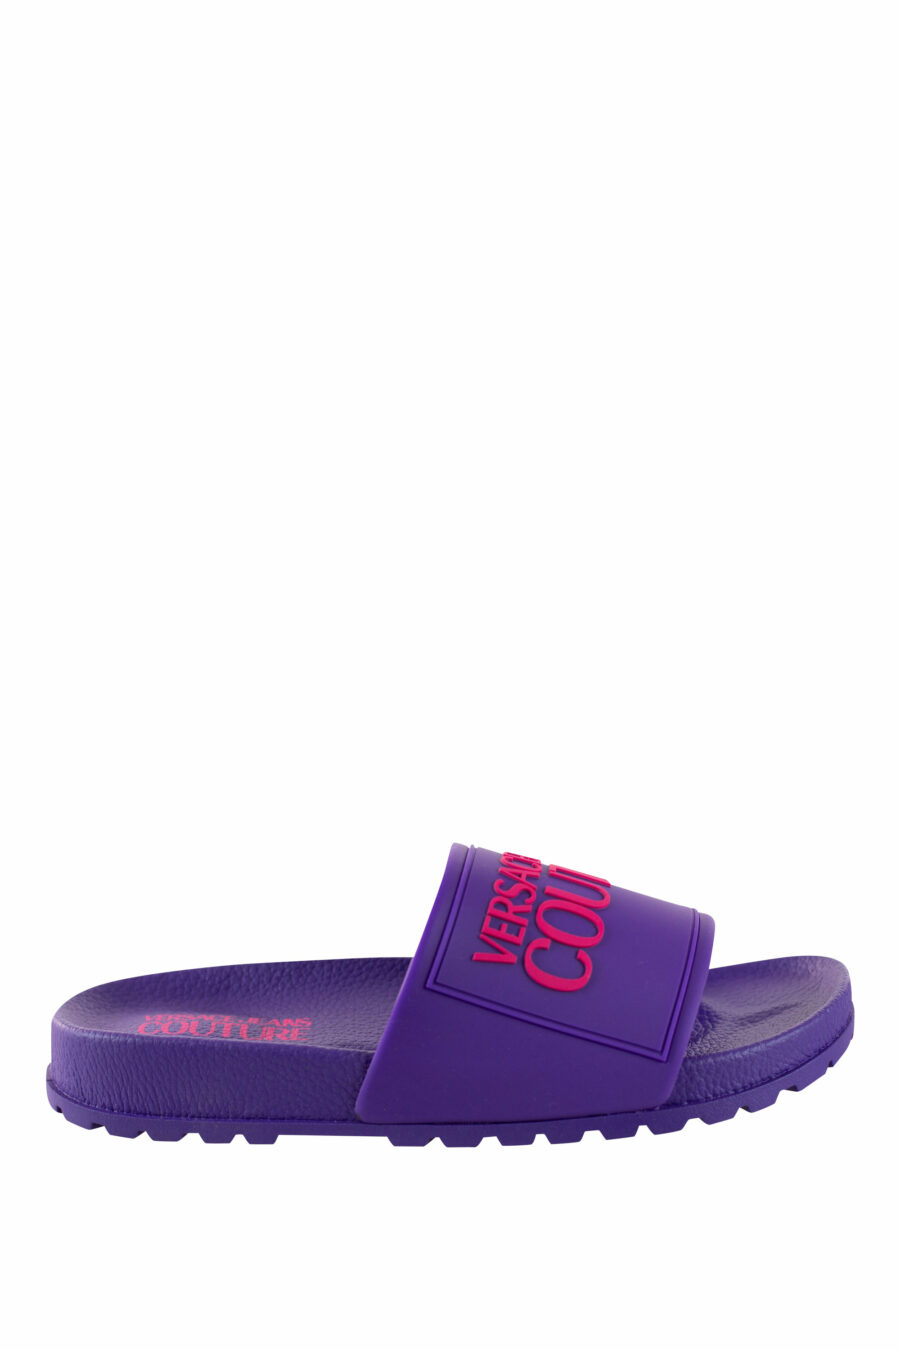 Tongs violettes avec logo et semelle rugueuse - IMG 4381